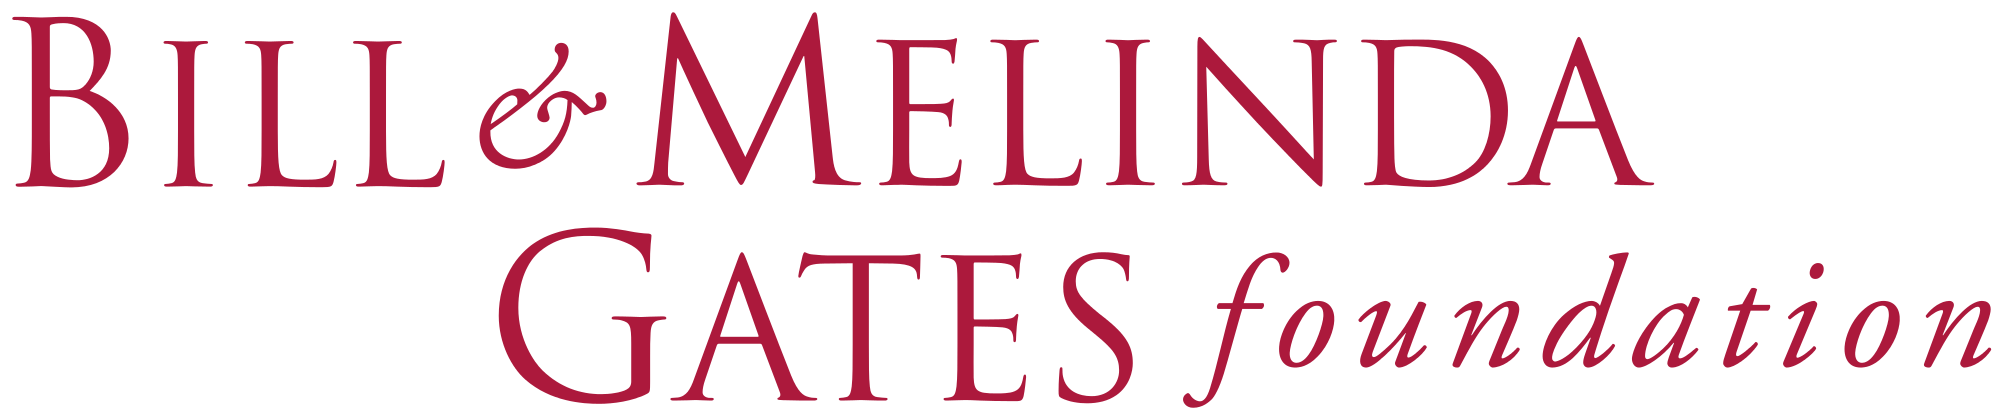 Bill-Melinda-Gates- ntọala-Logo.svg_